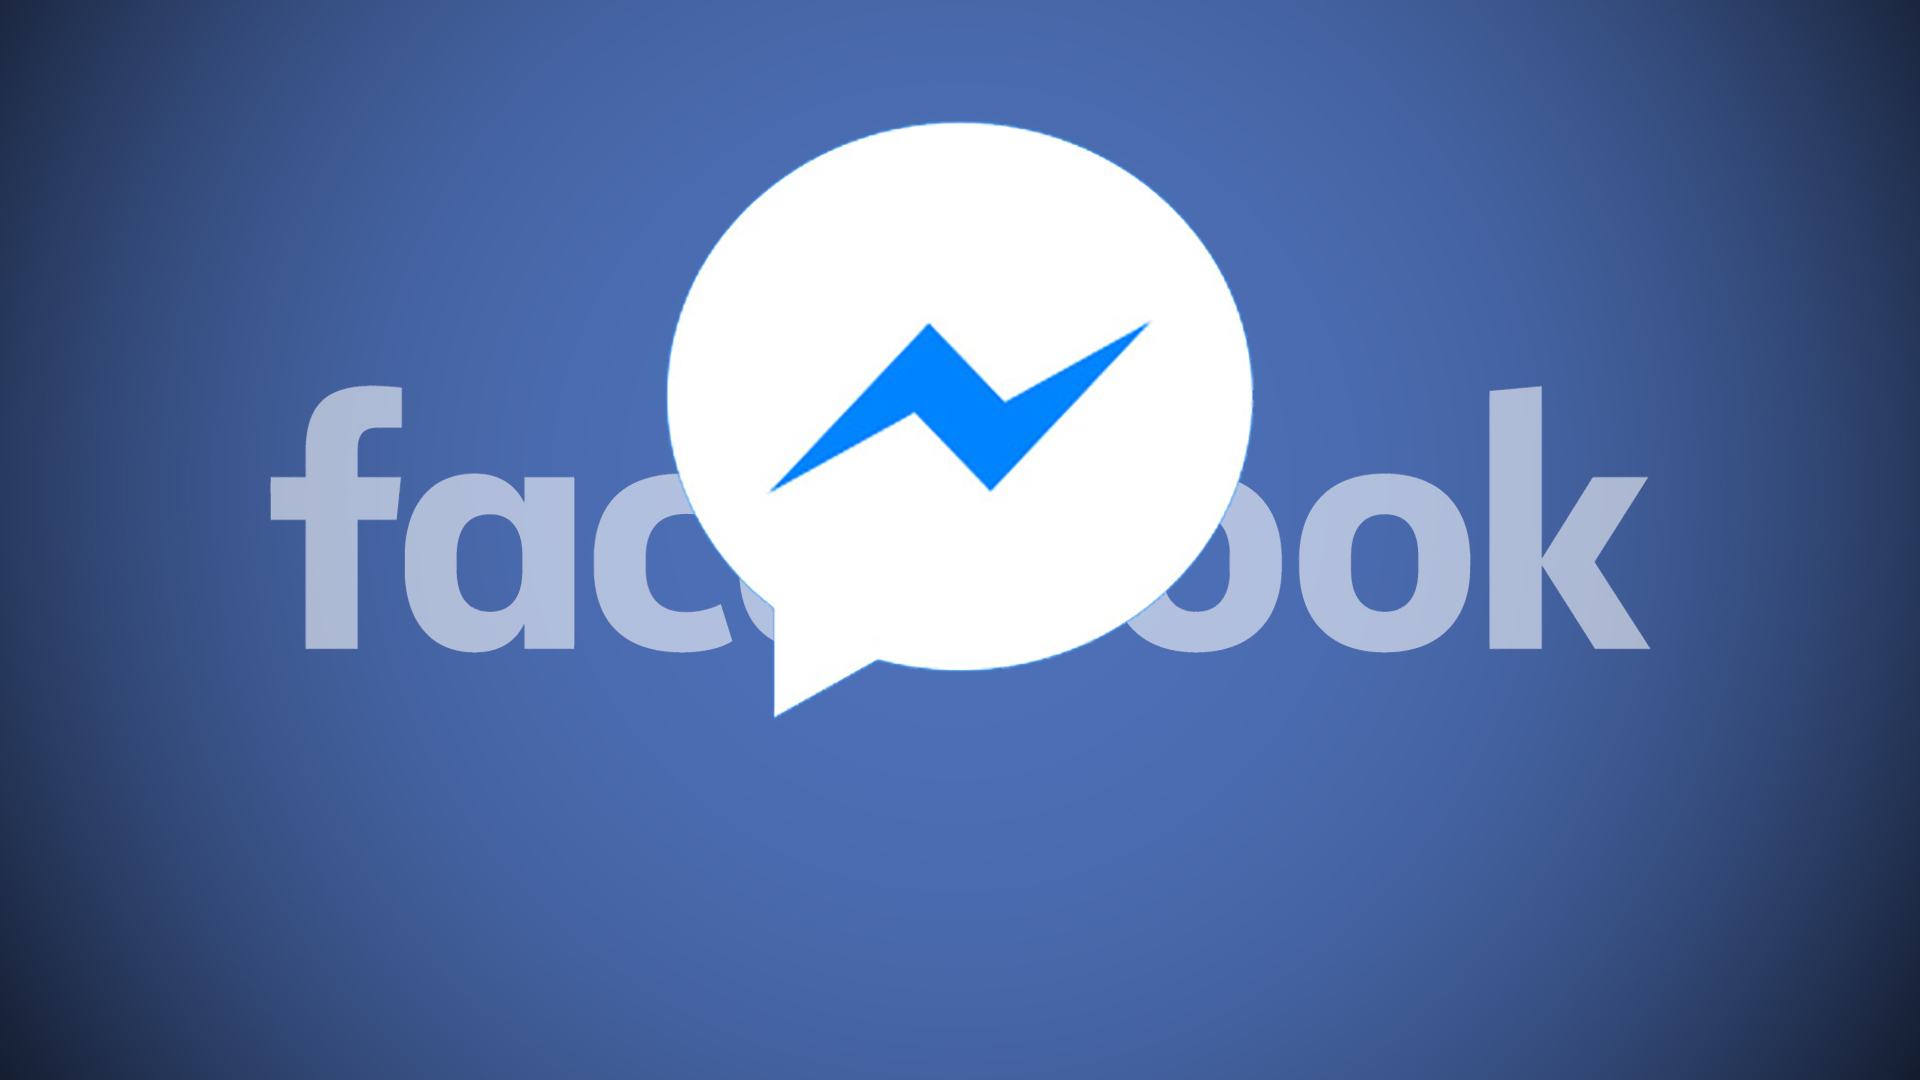 facebook-messenger-logo3-1920